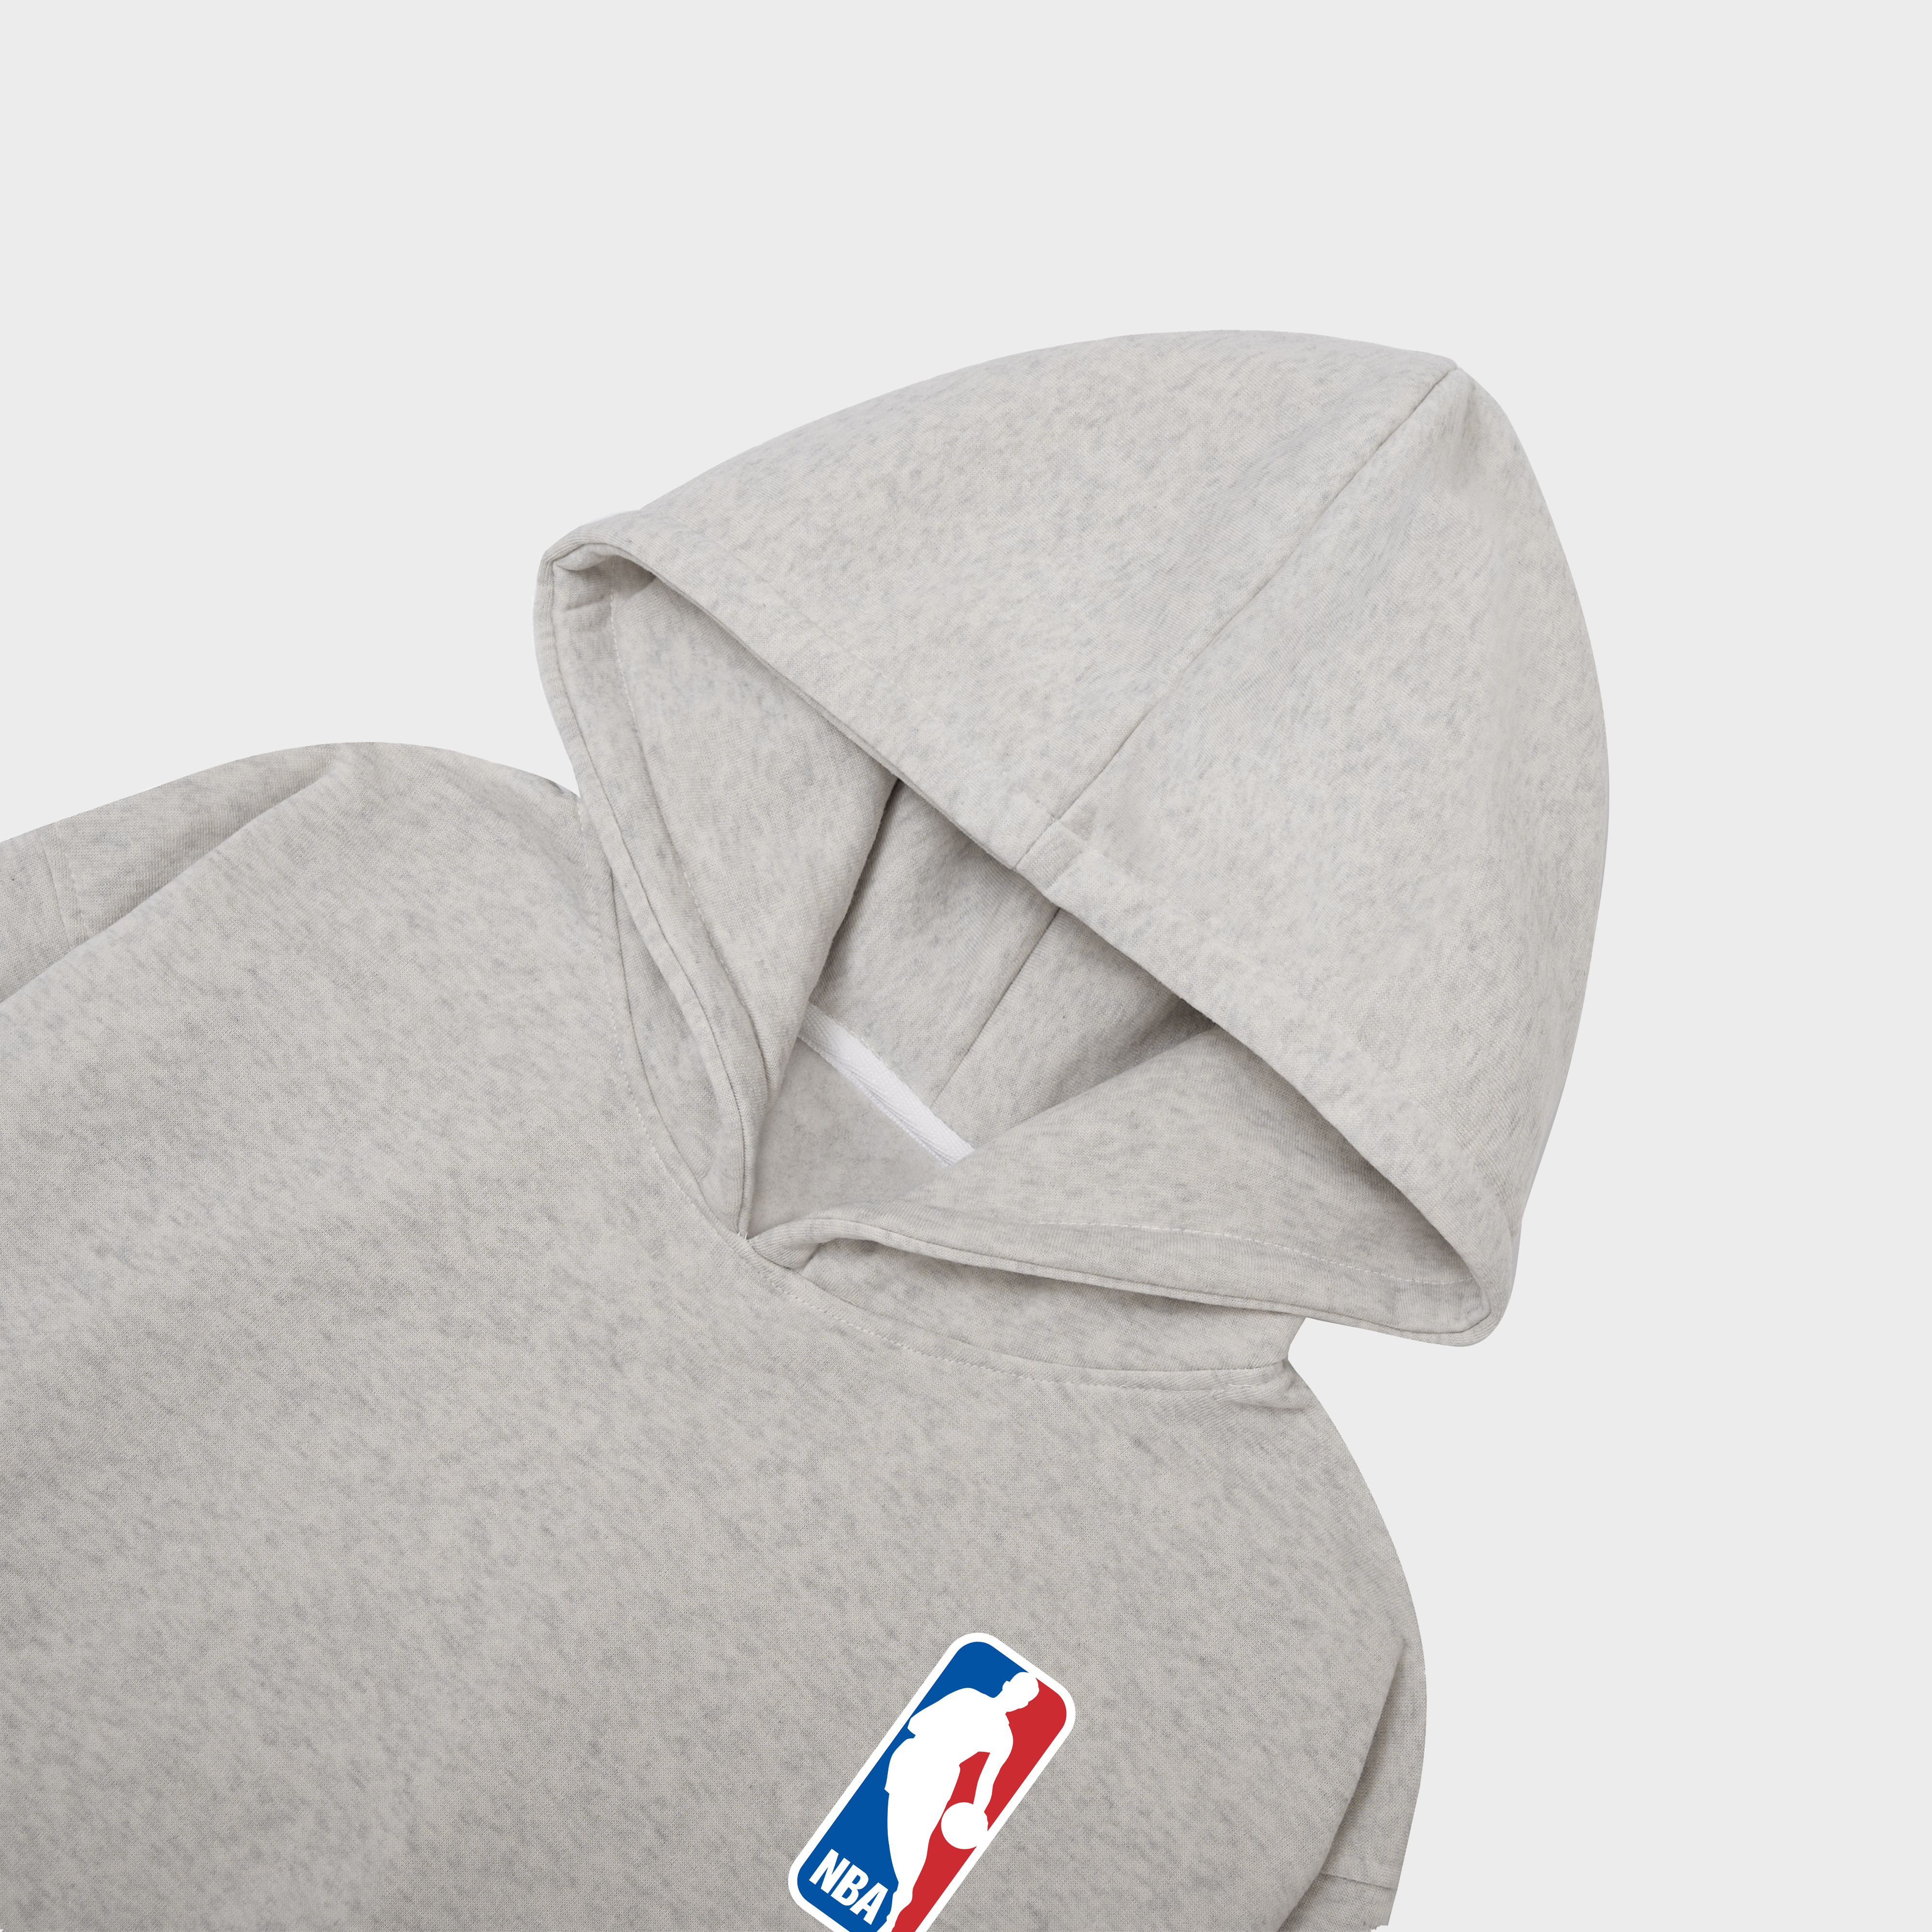 NBA Basketball Logo Hoodie